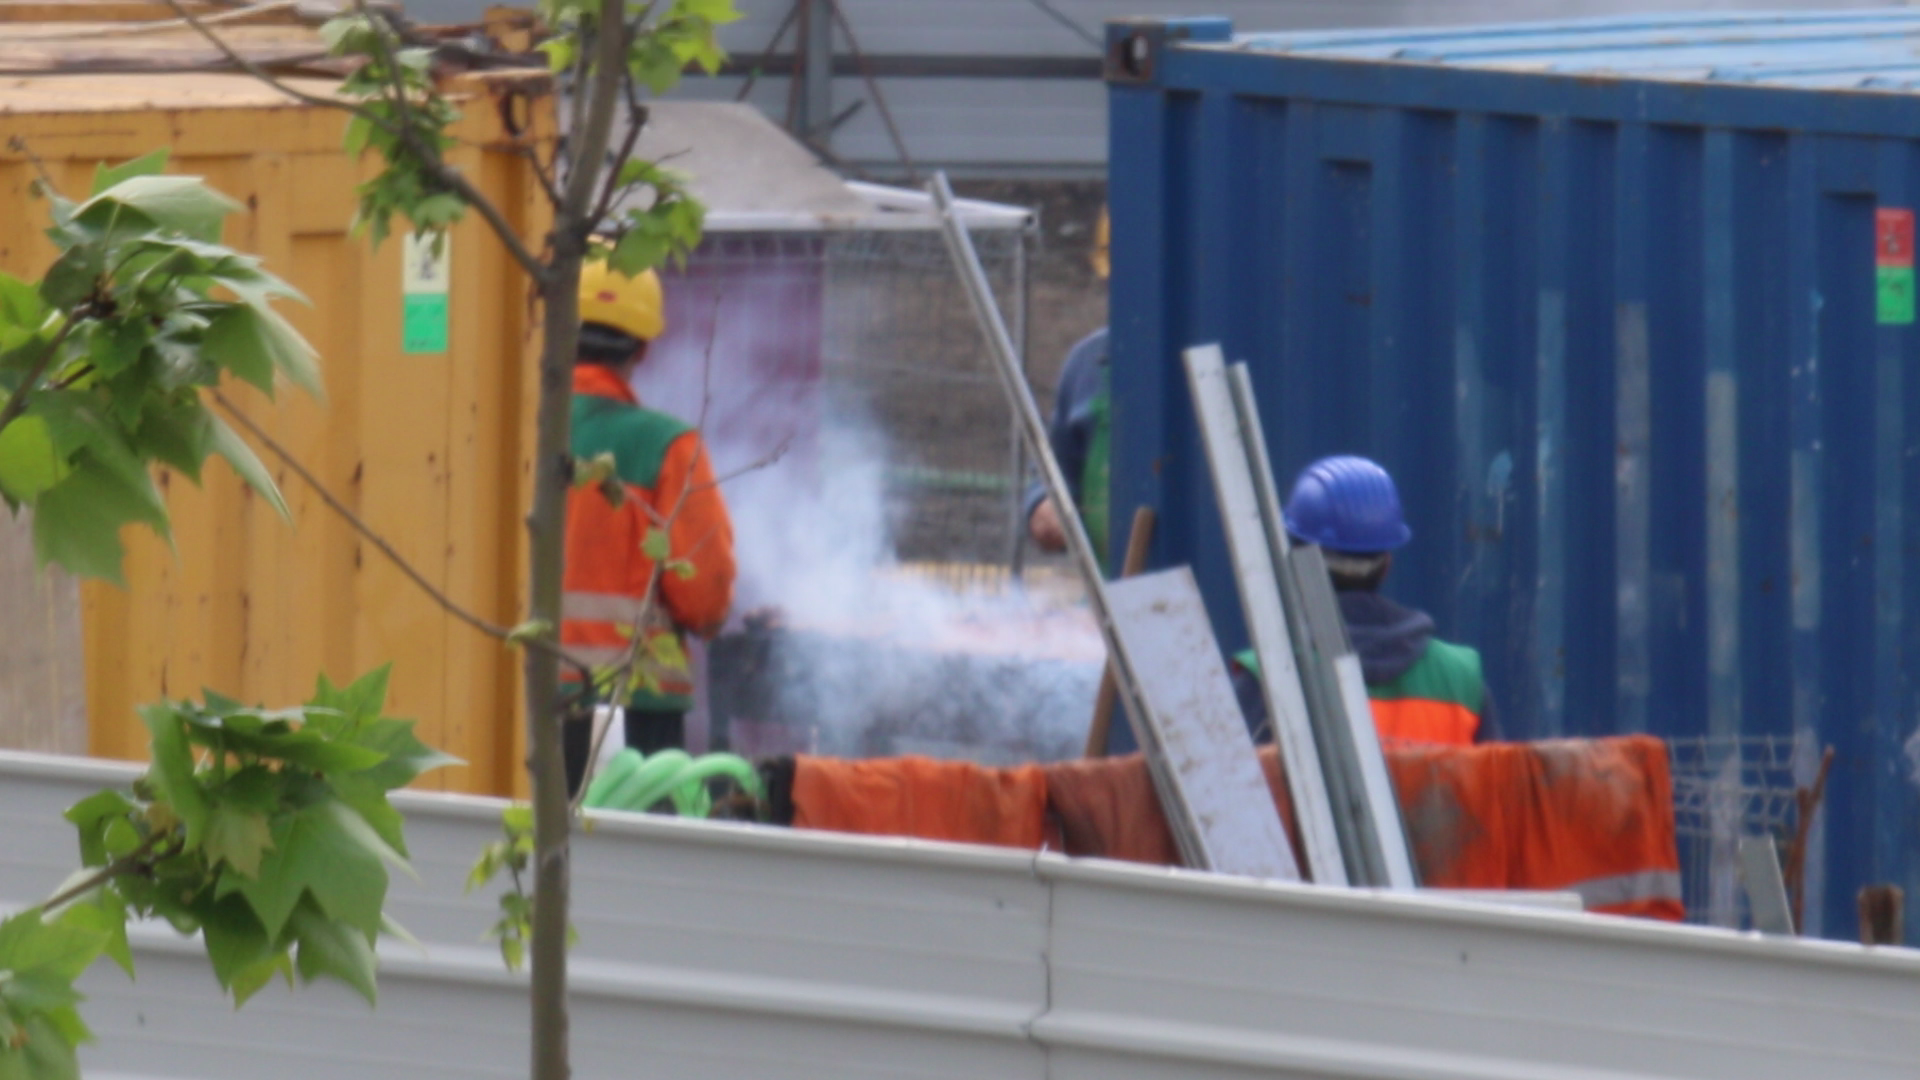 Muncitorii au facut gratarul intr-un loc mai ferit, intre cateva containere